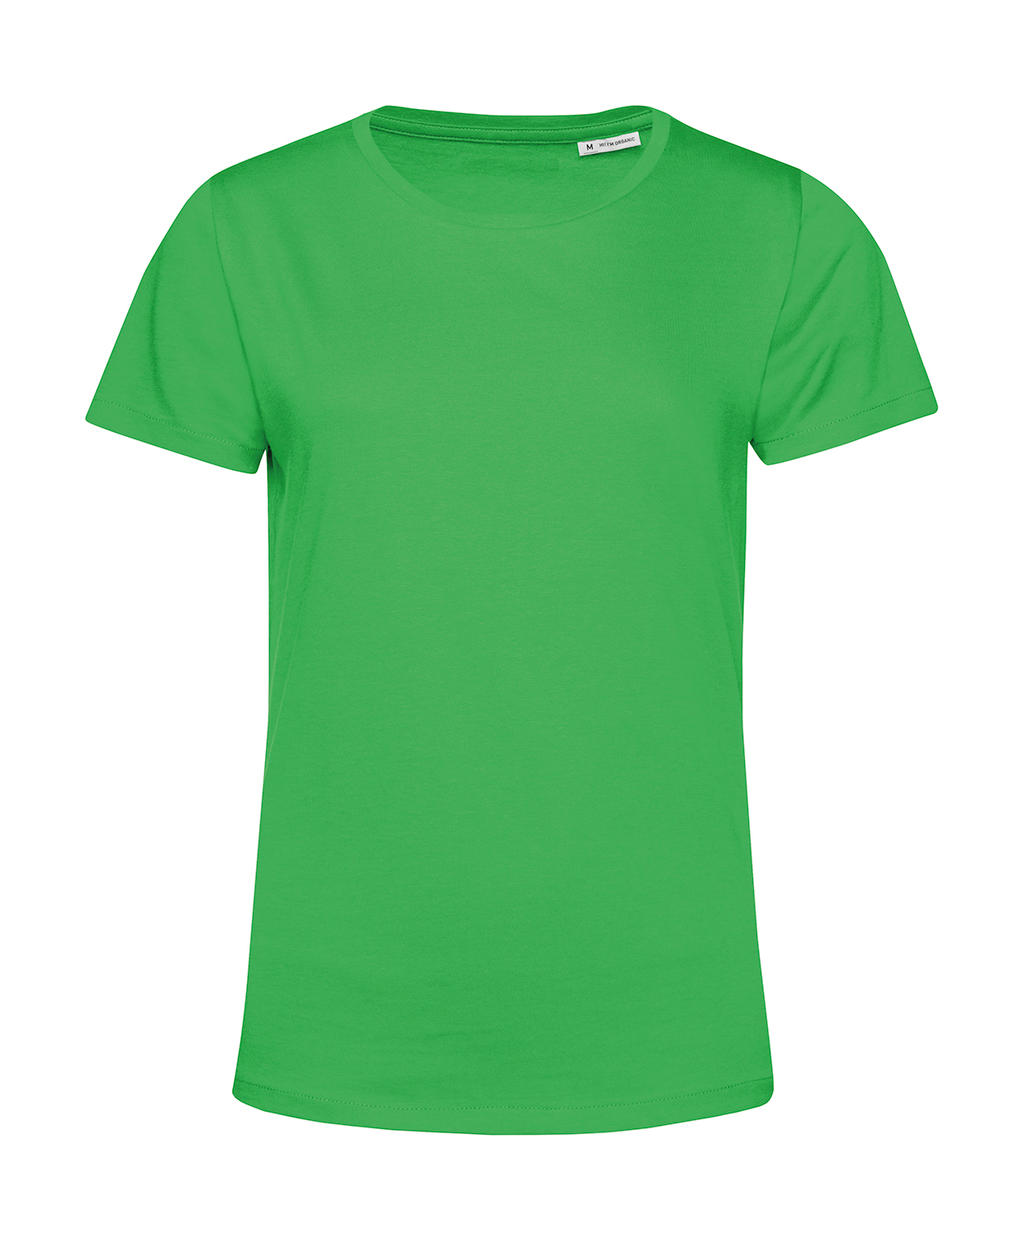 Tričko dámské BC Organic Inspire E150 - zelené, L